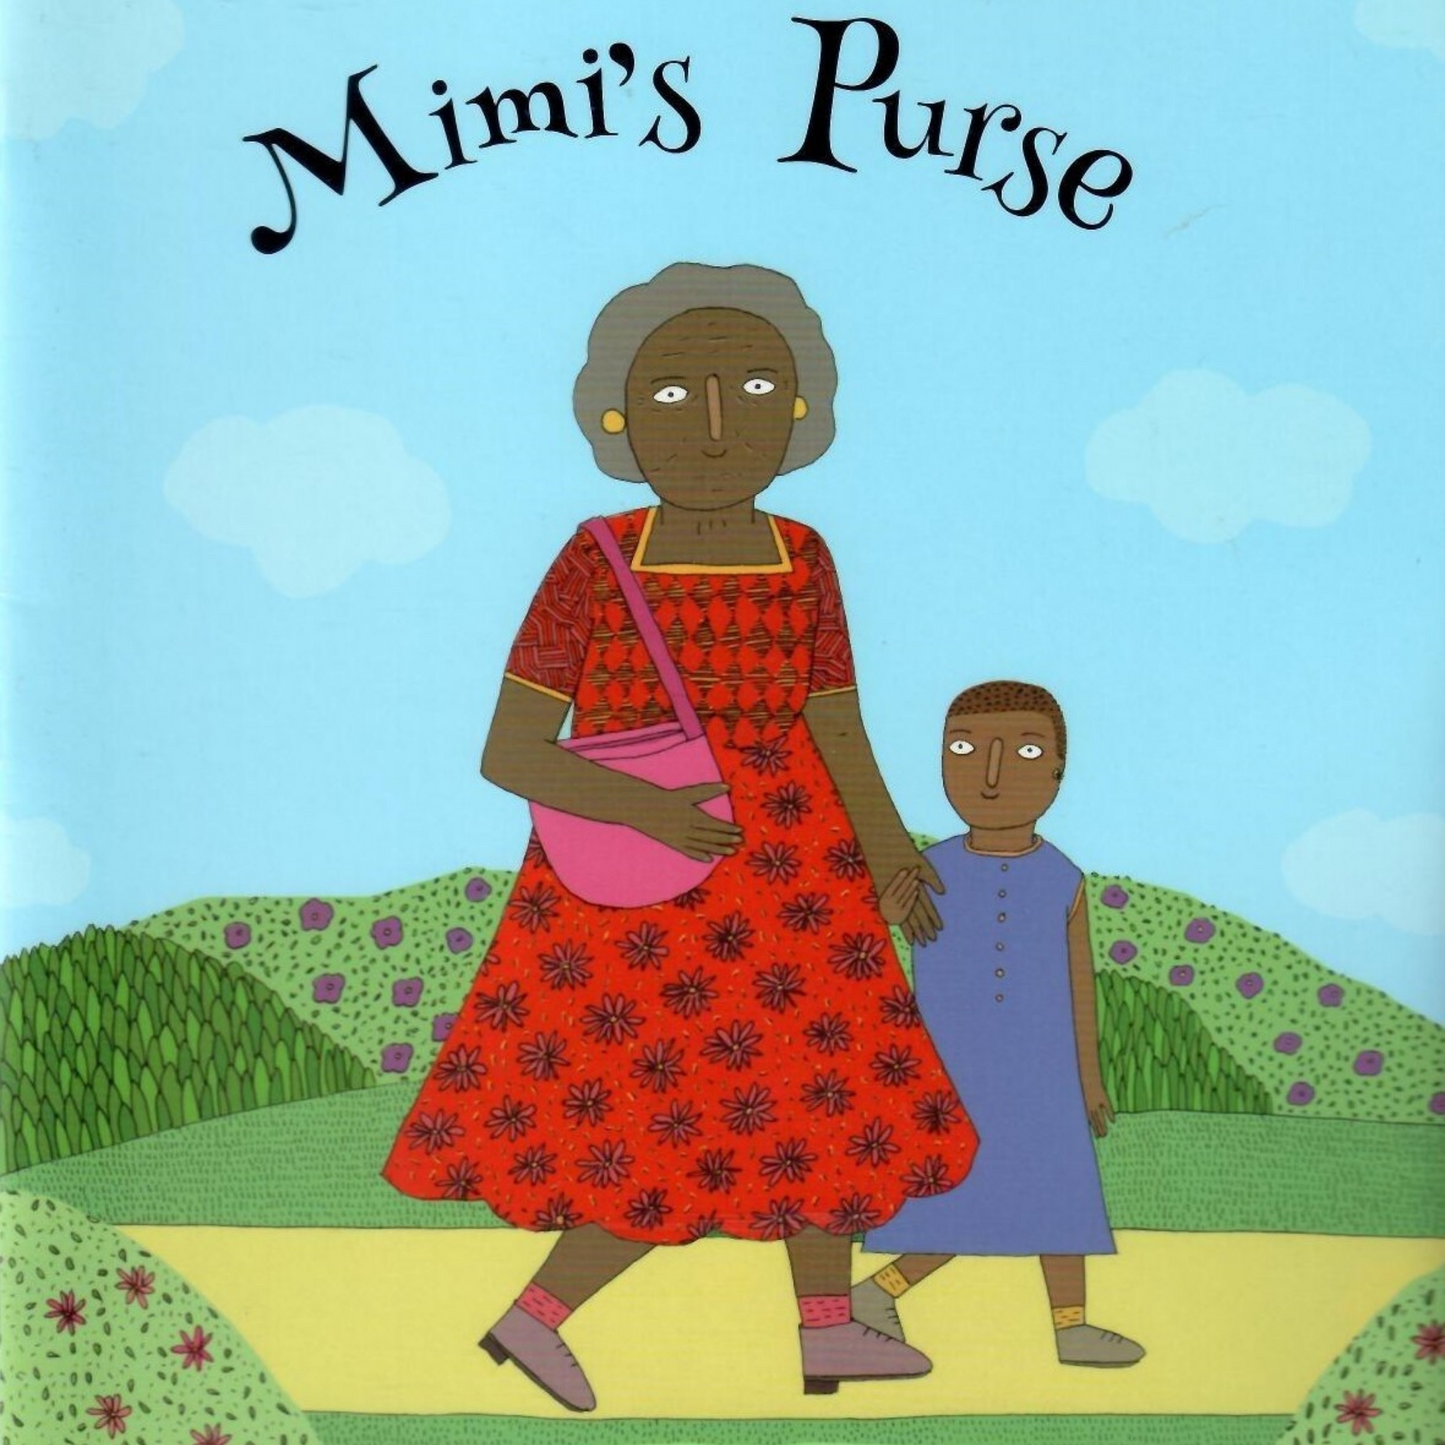 Mimi's Purse